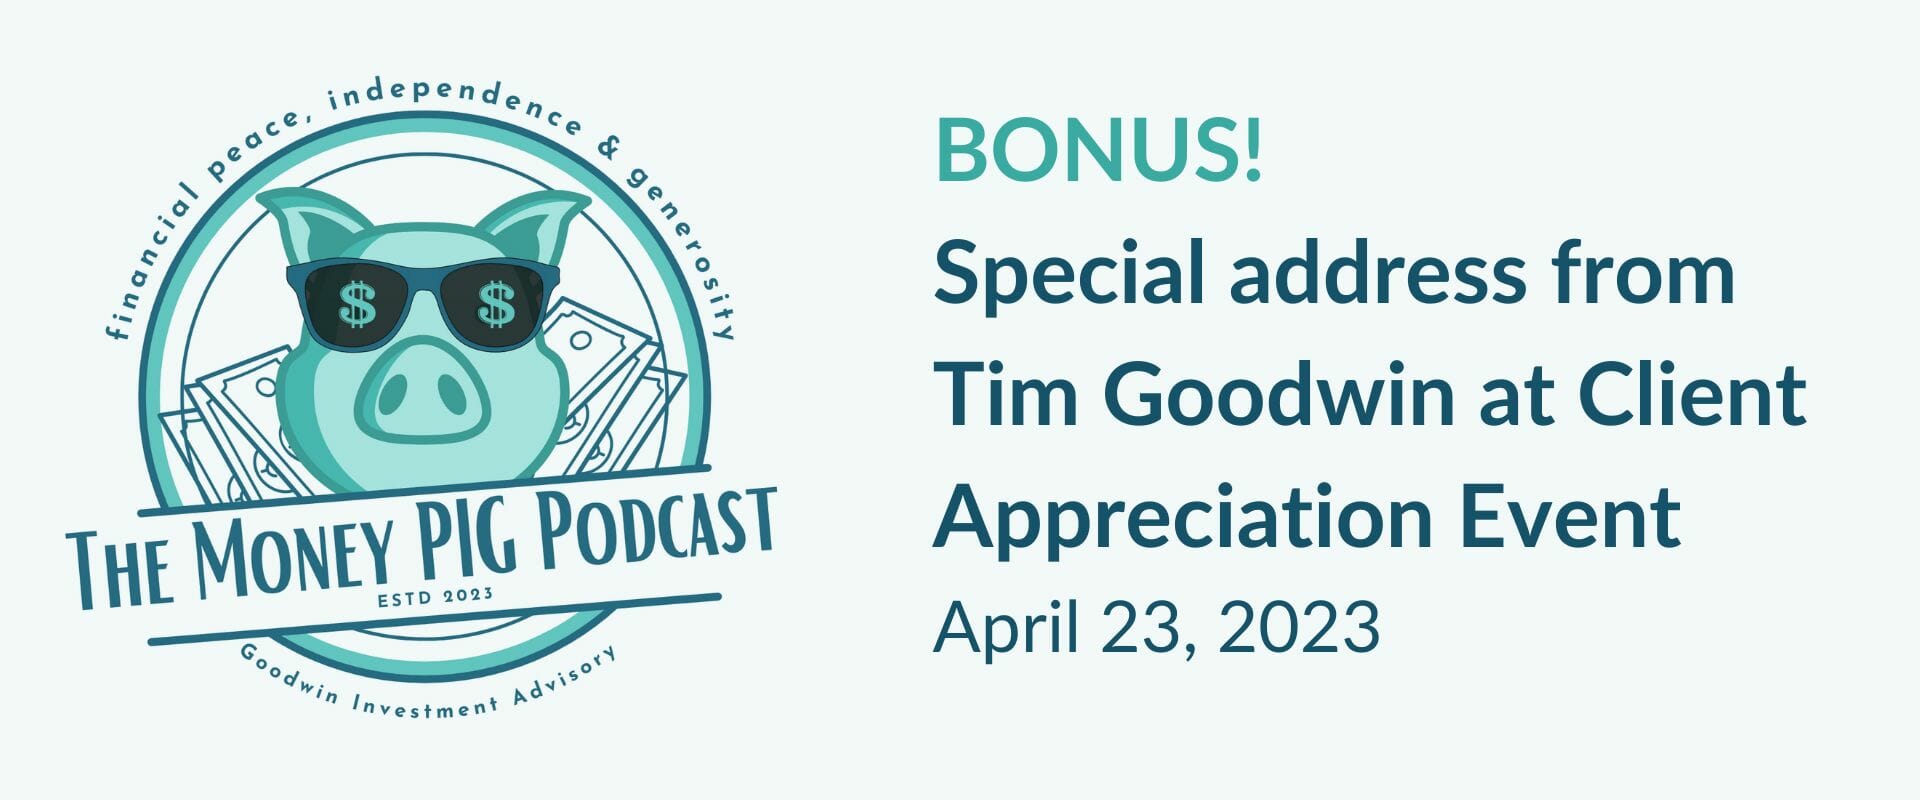 BONUS! Special address from Tim Goodwin at Client Appreciation Event April 23, 2023